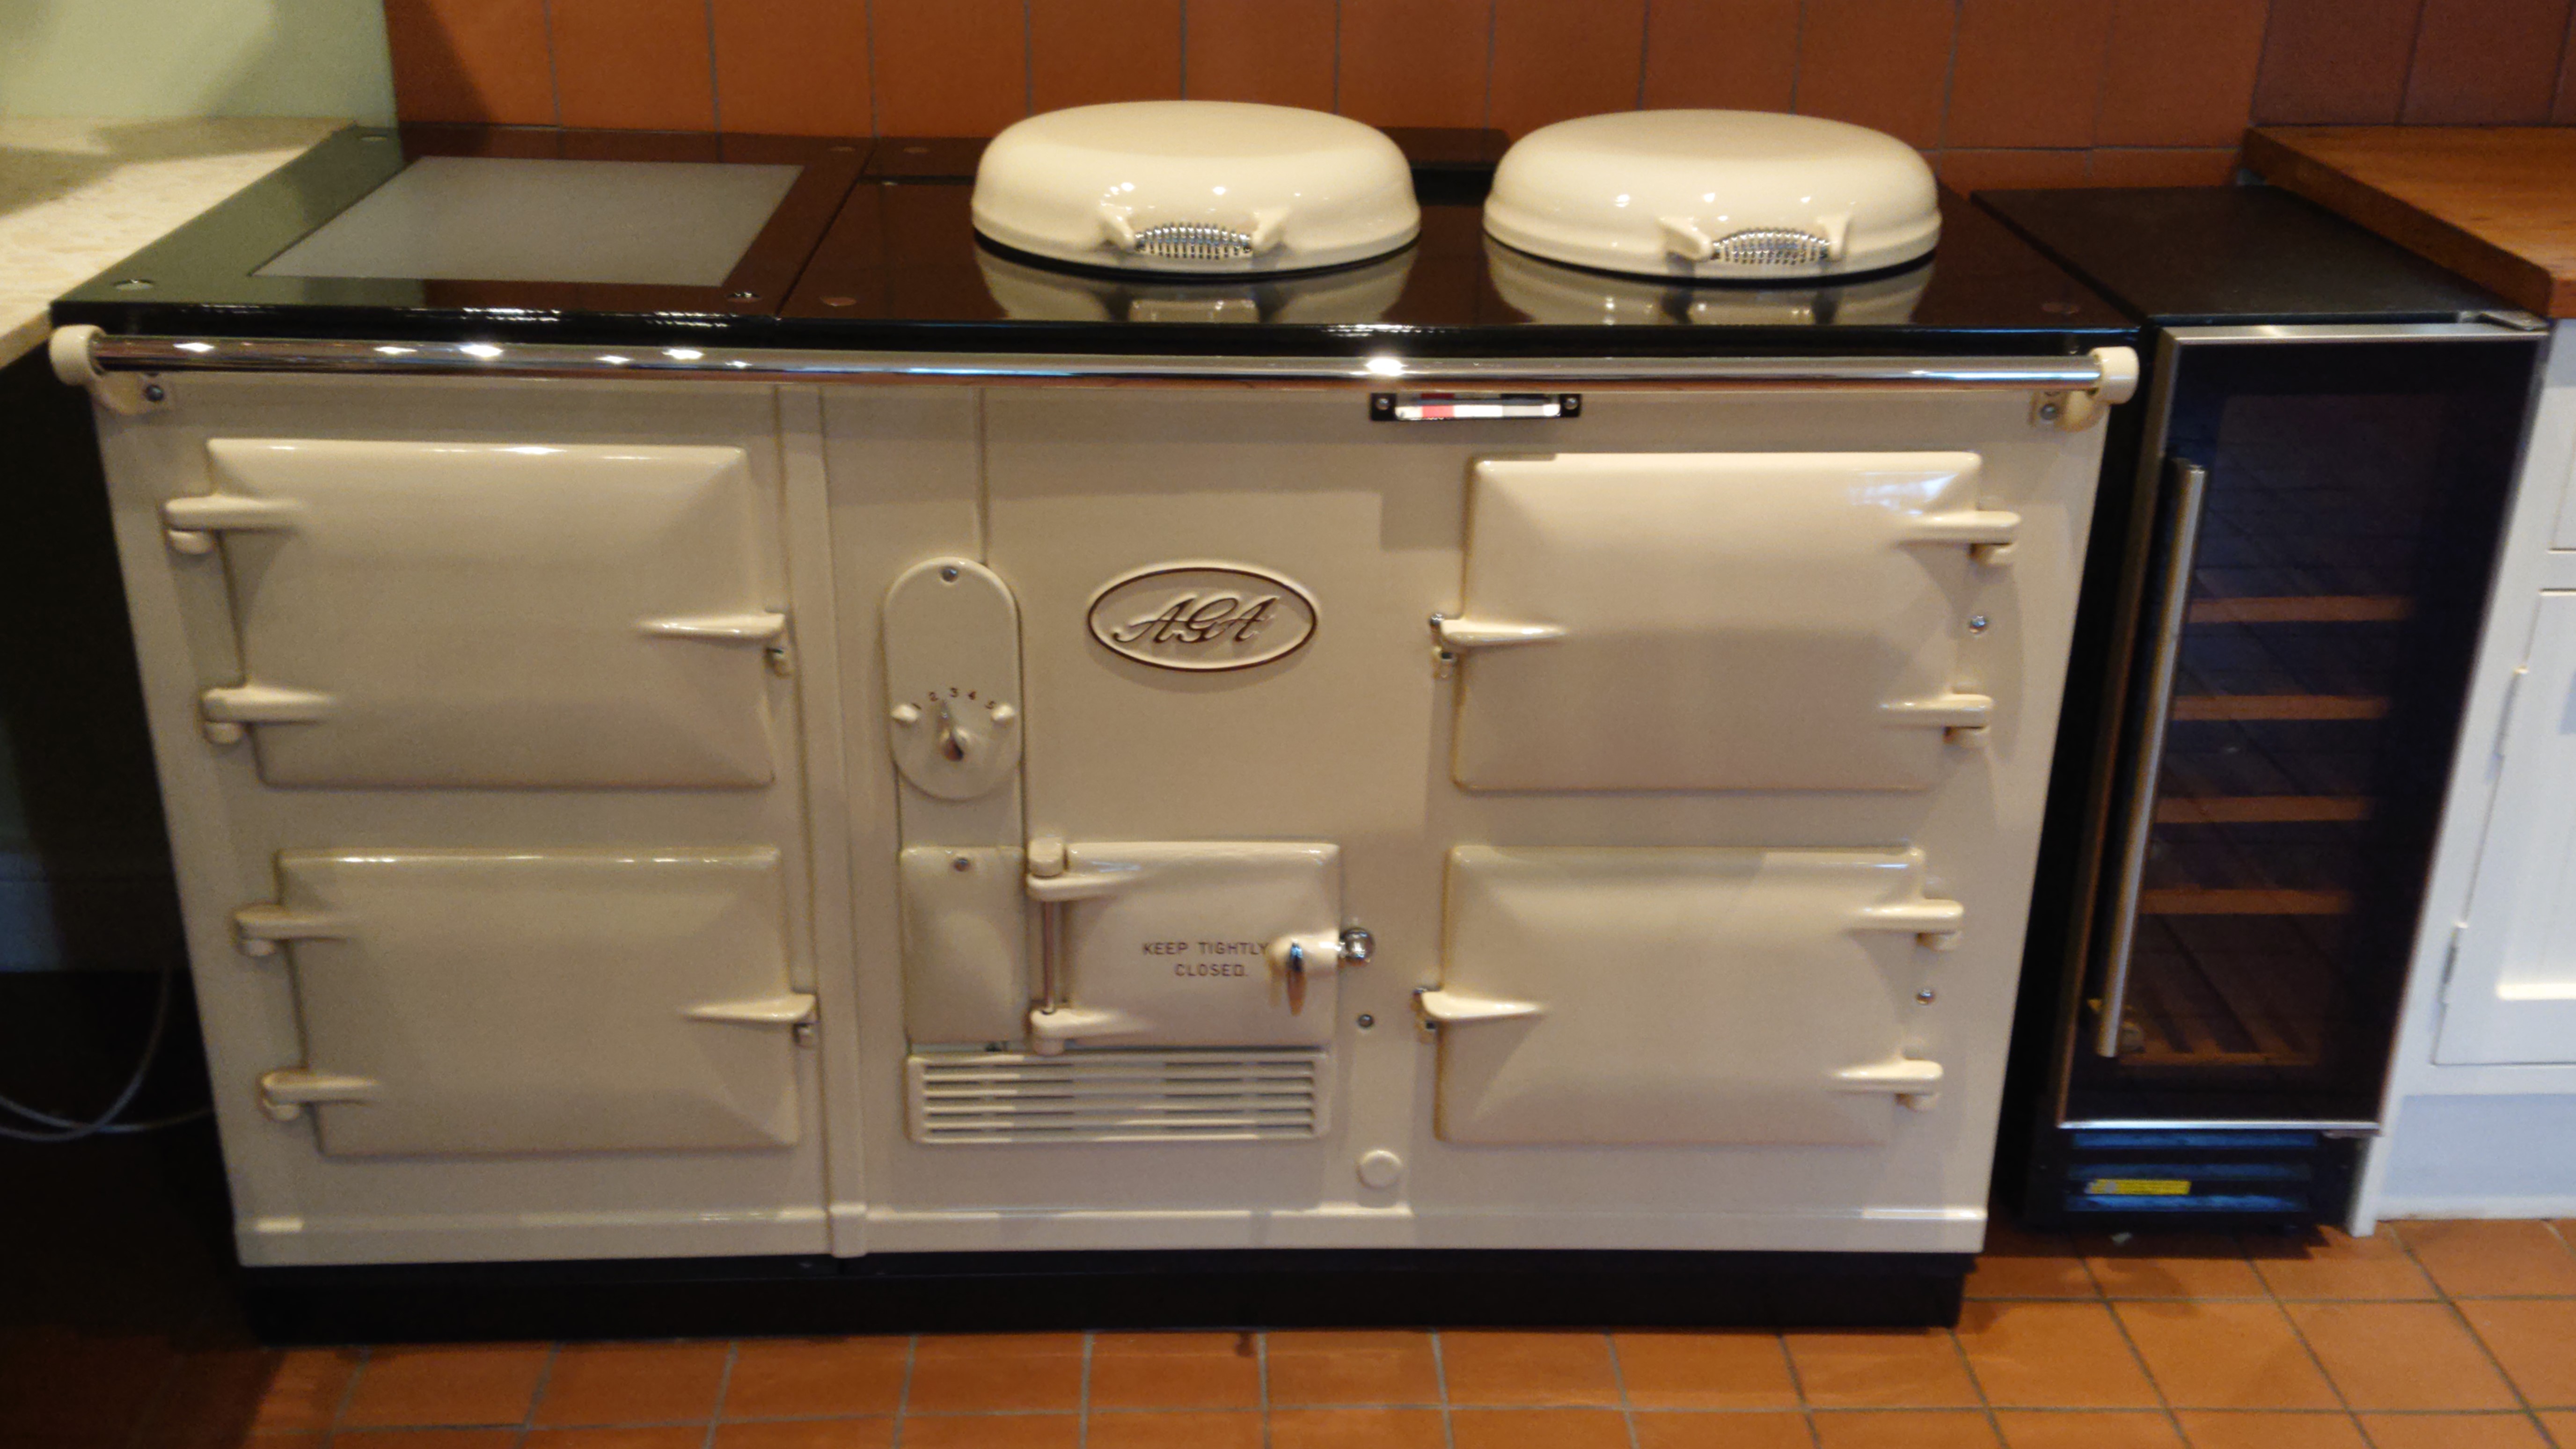 4 Oven Standard (1941-1972) Aga cooker